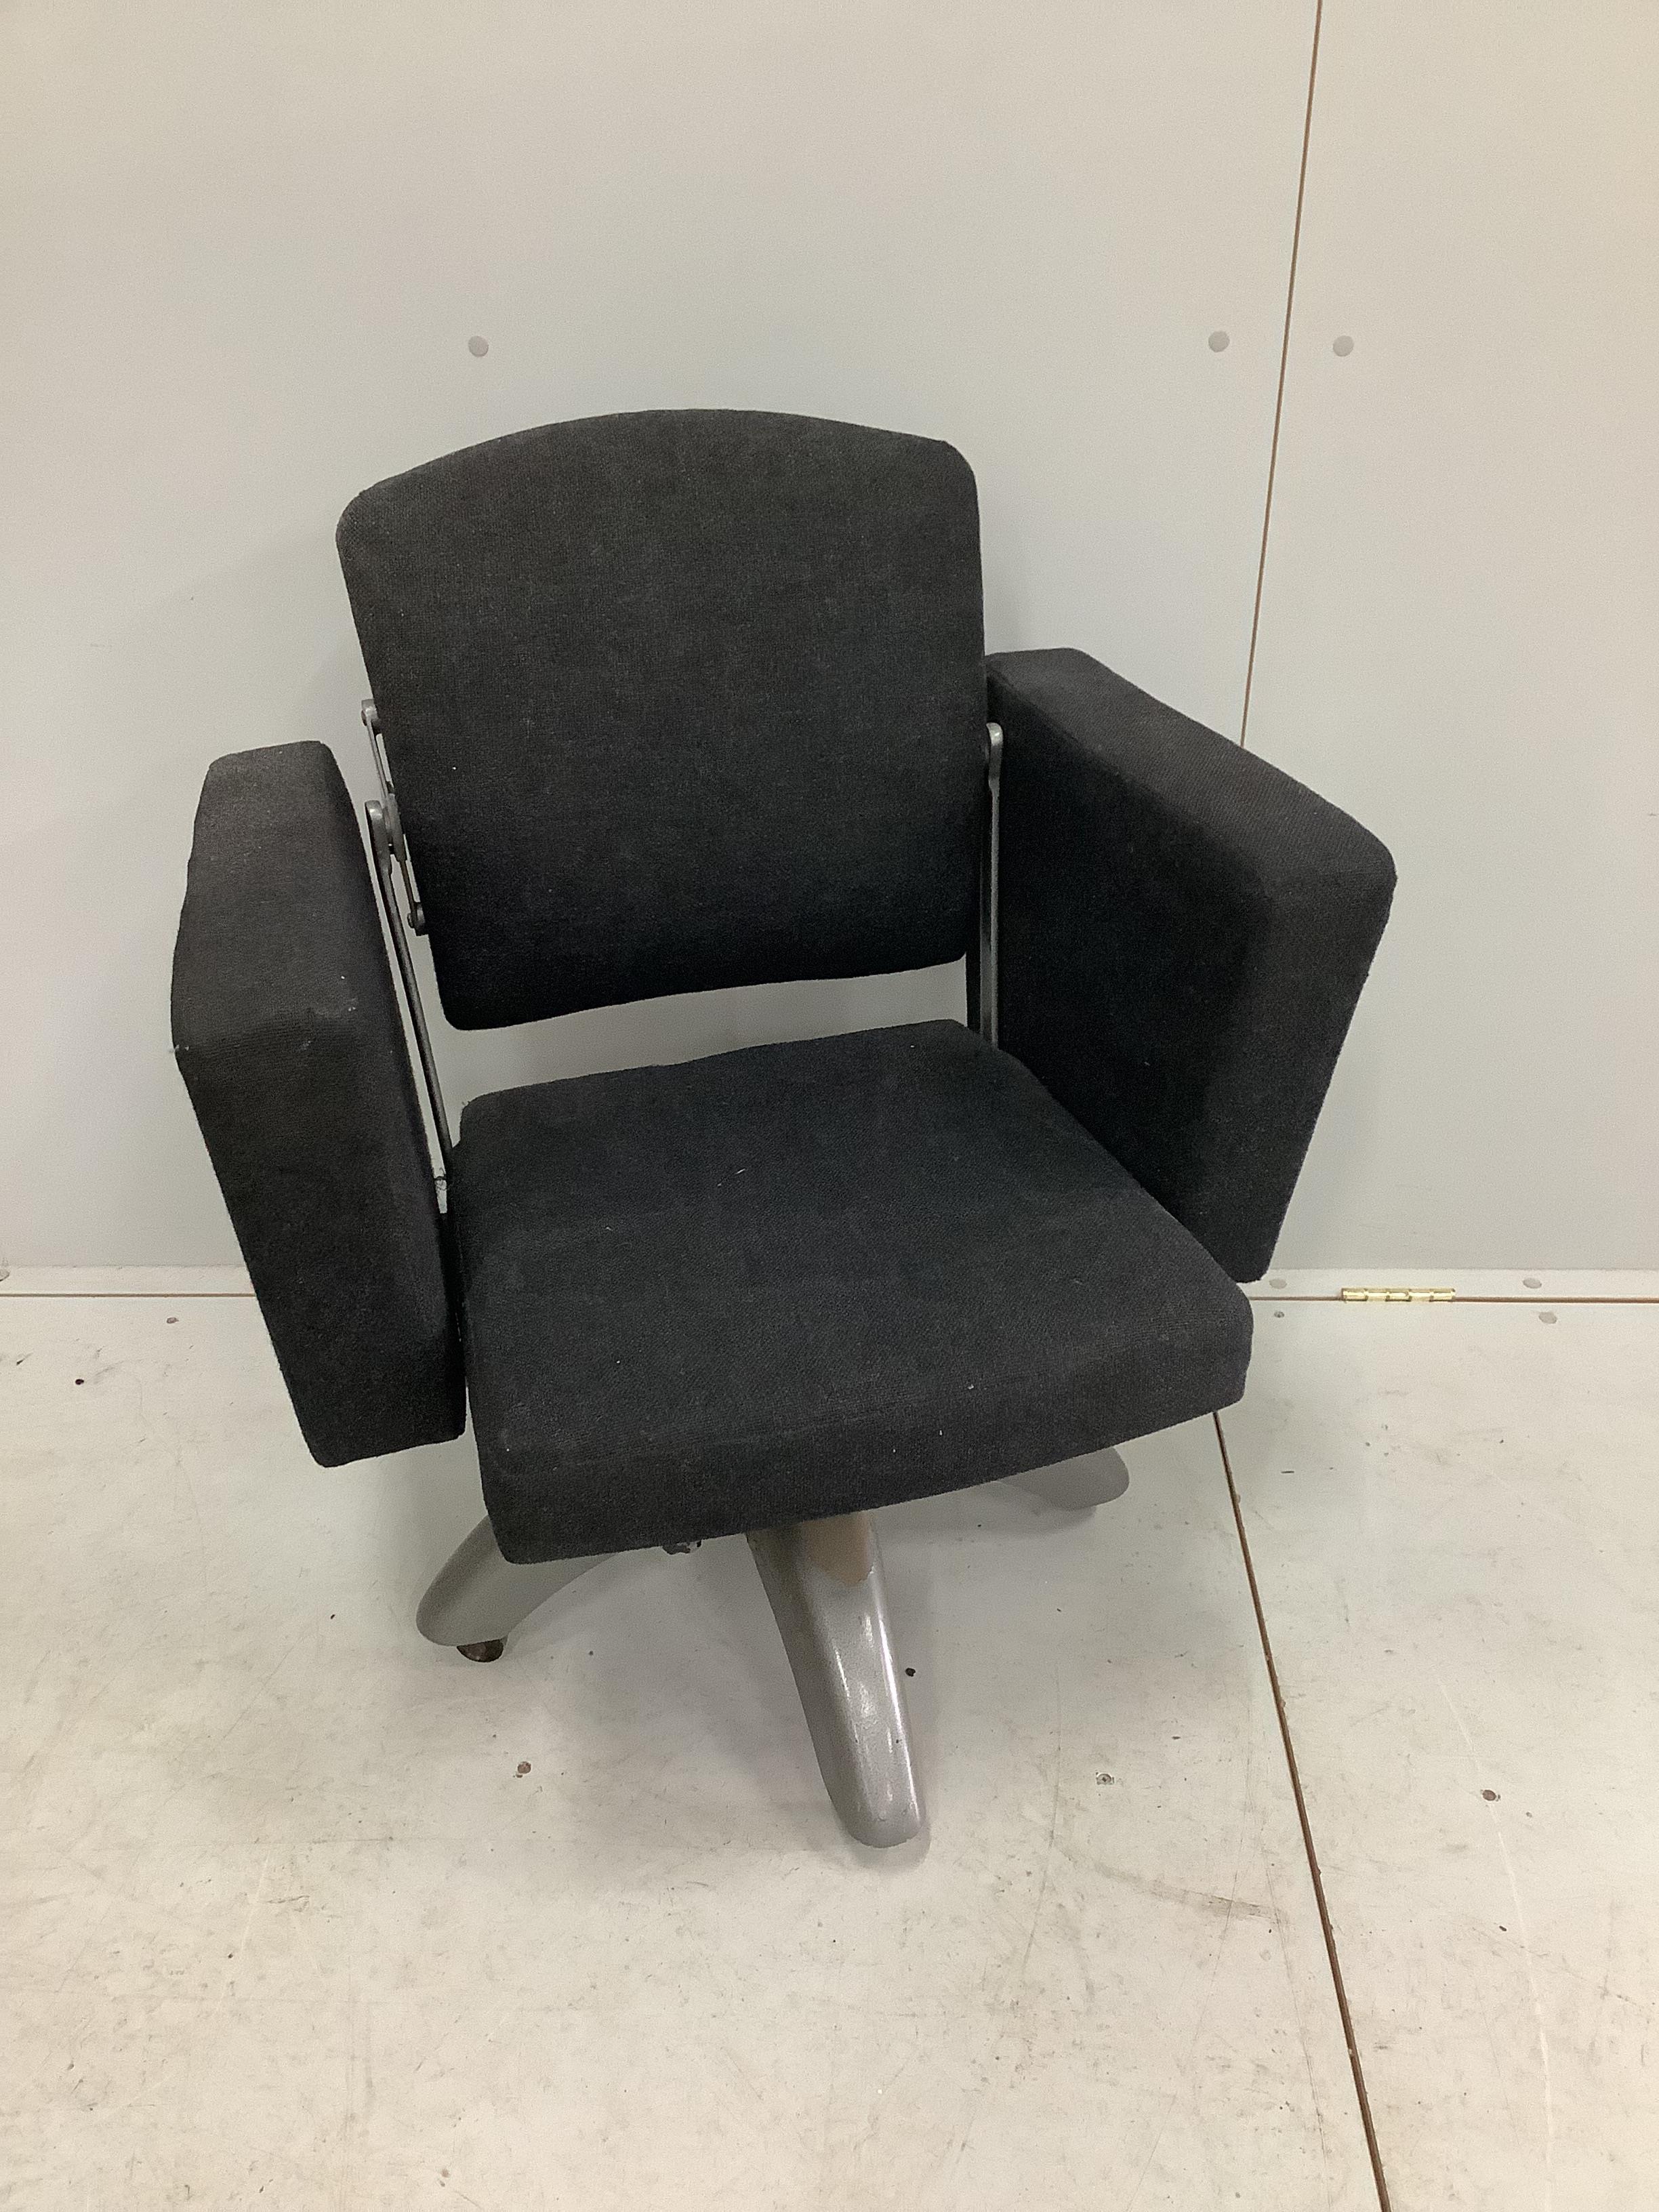 A Tan-Sad posture chair, width 72cm, depth 56cm, height 86cm